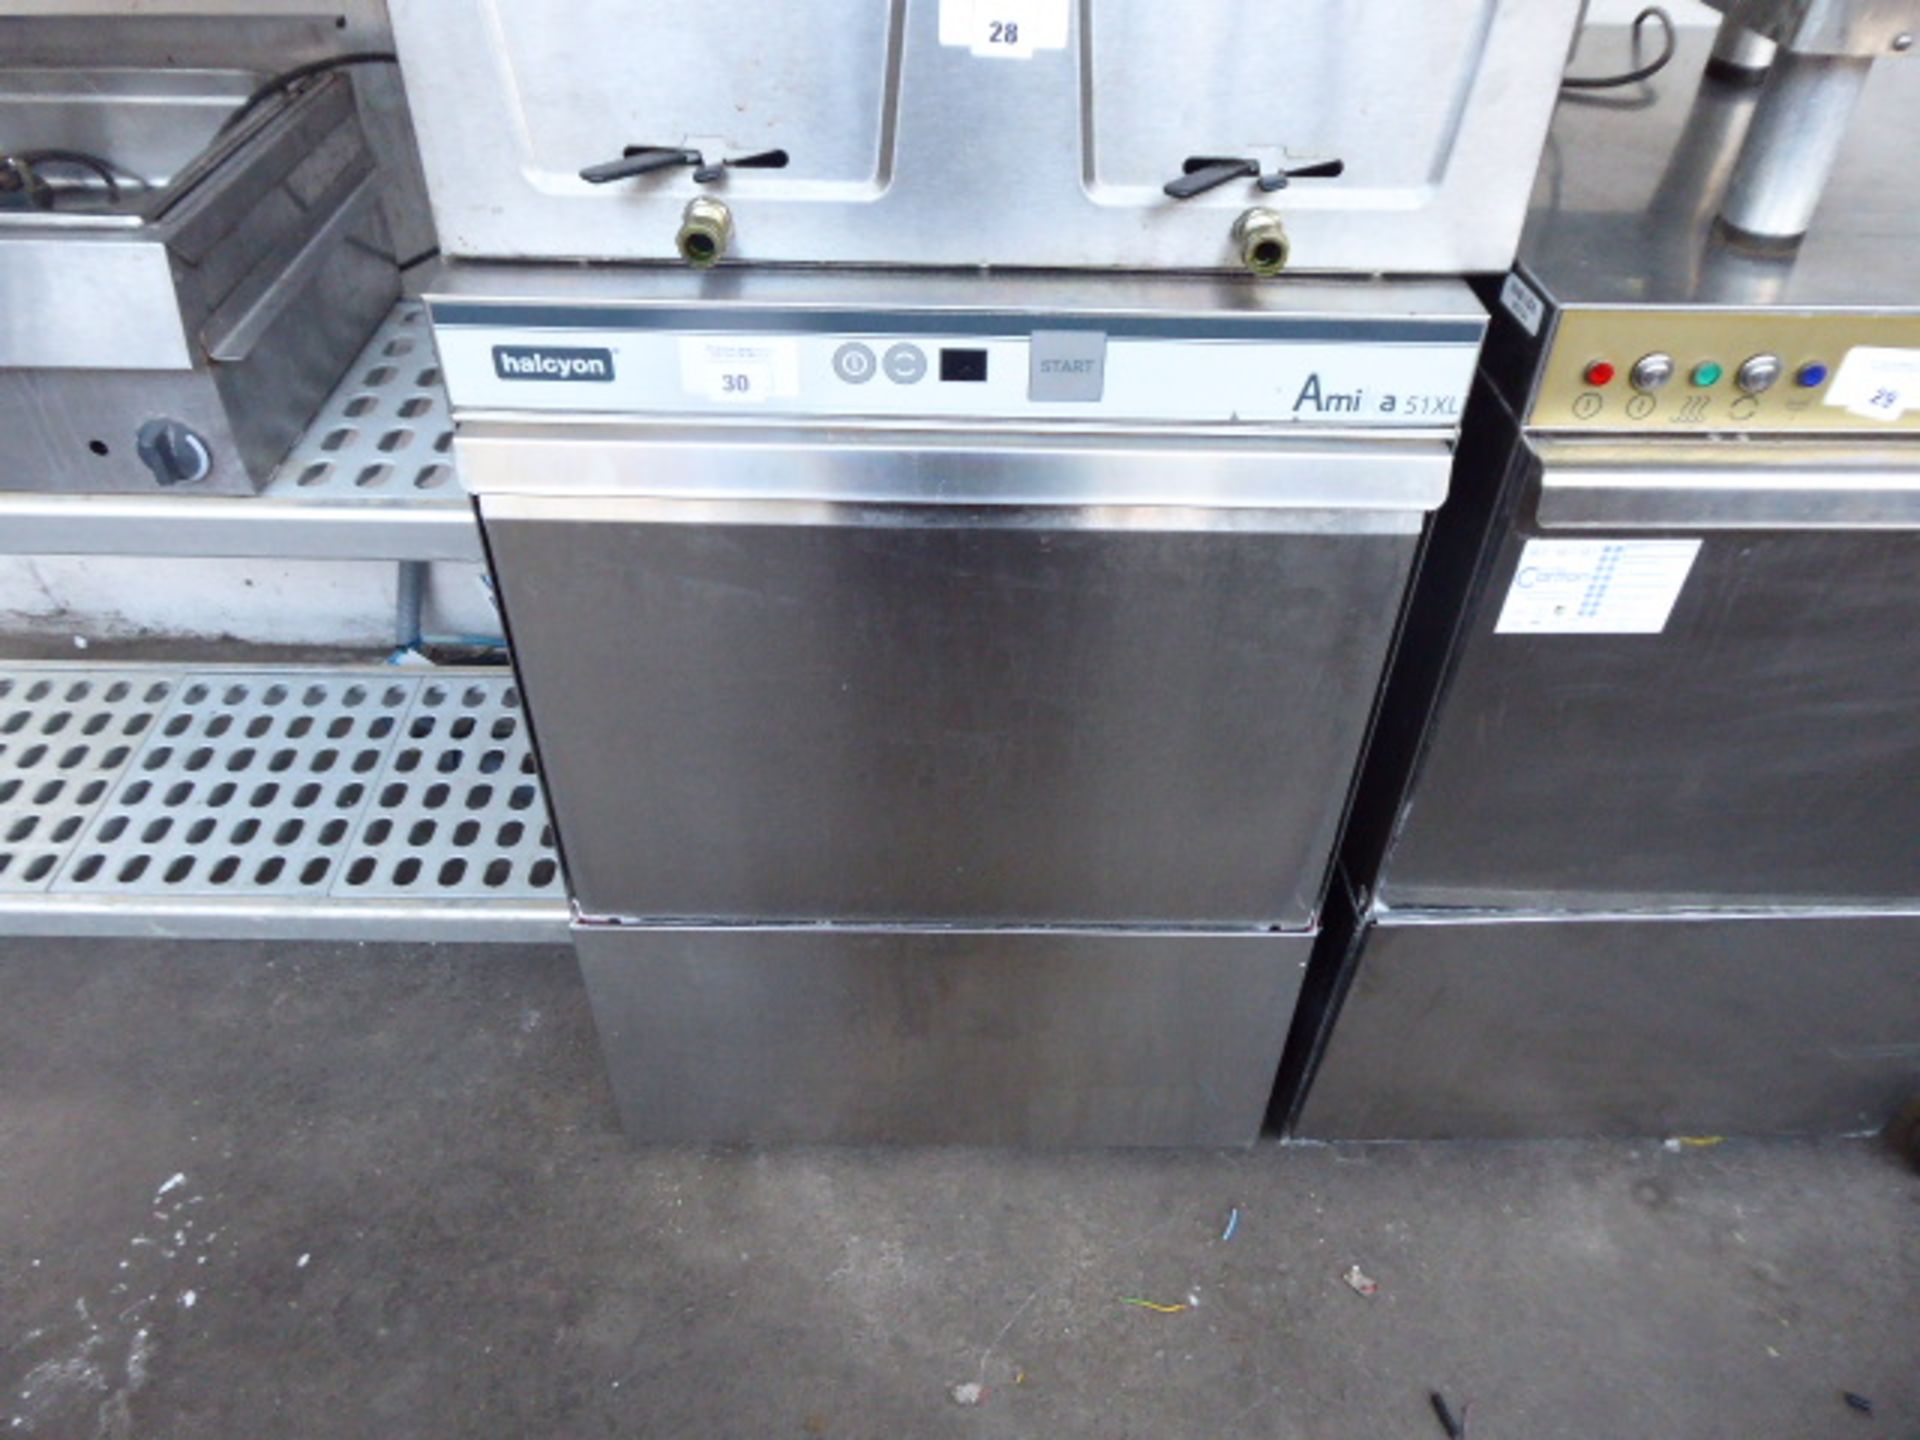 58cm Halcyon Amika 15XL under counter drop front dishwasher